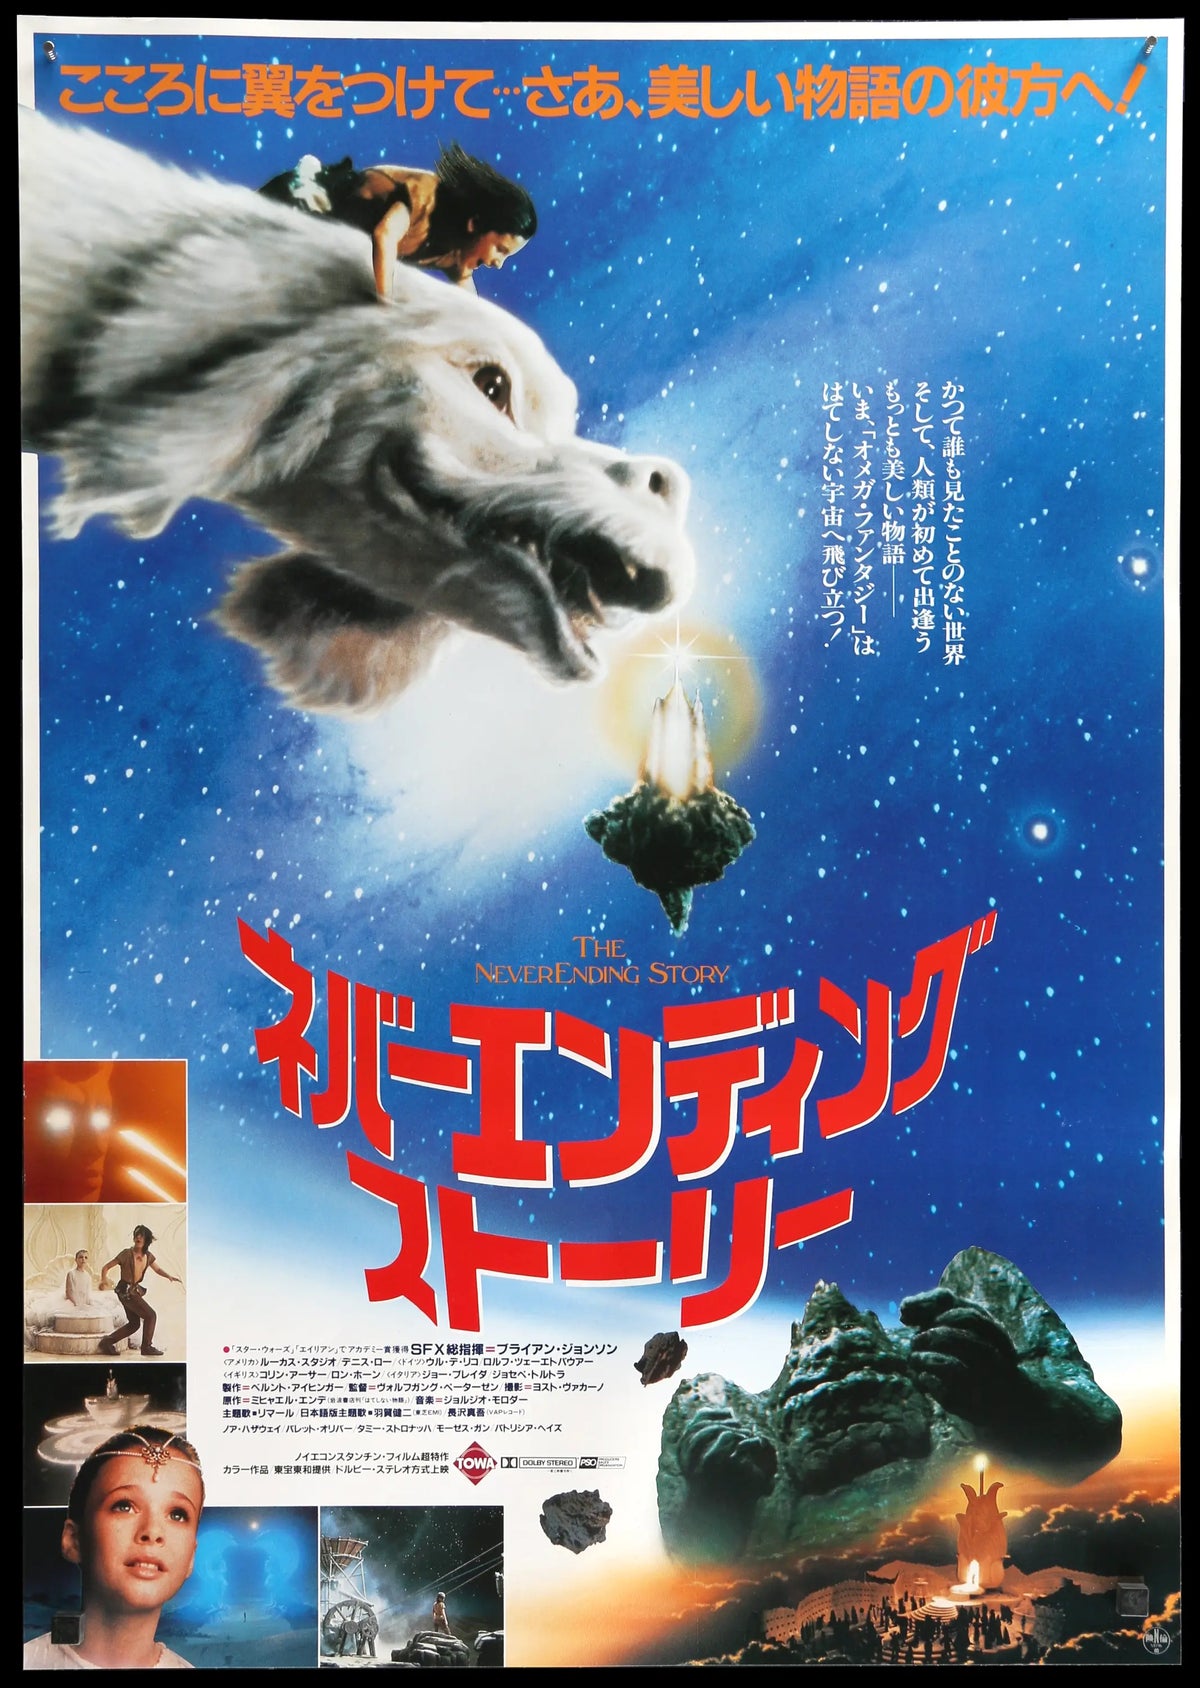 Neverending Story (1984) original movie poster for sale at Original Film Art